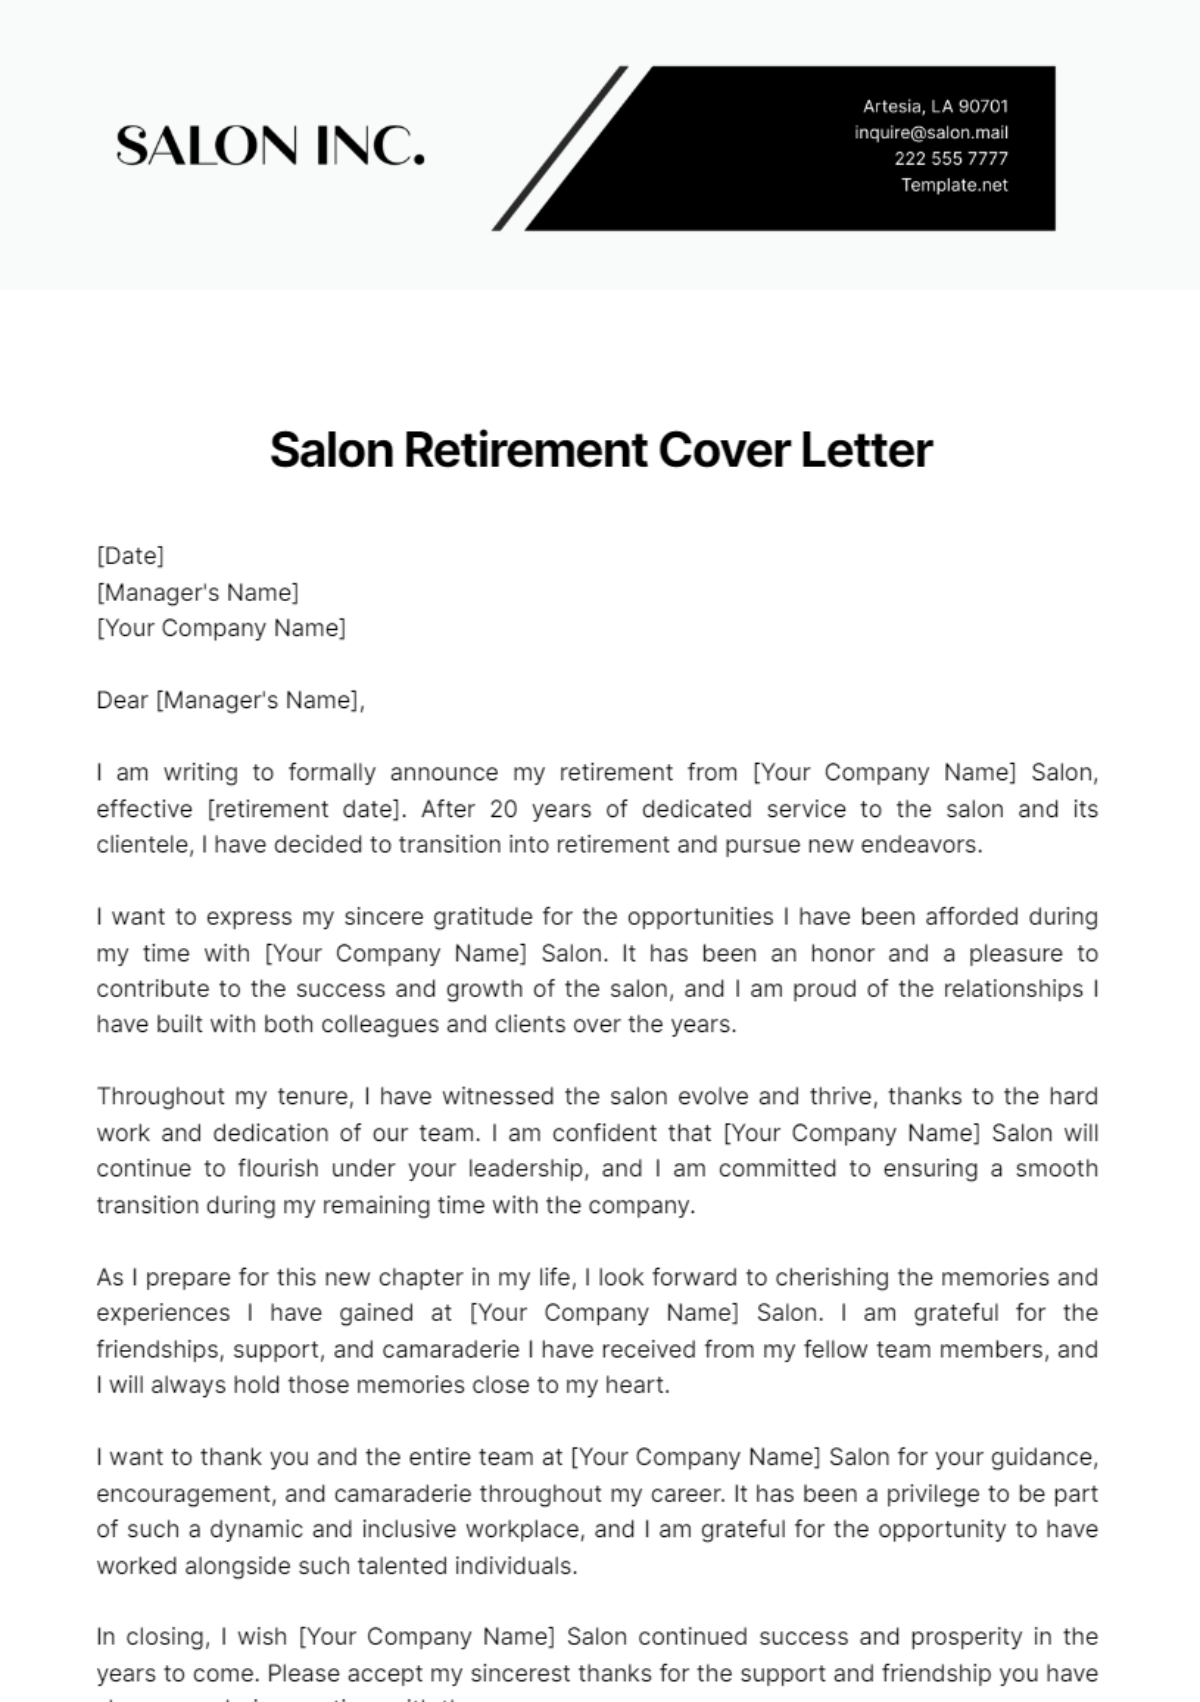 Salon Retirement Cover Letter Template